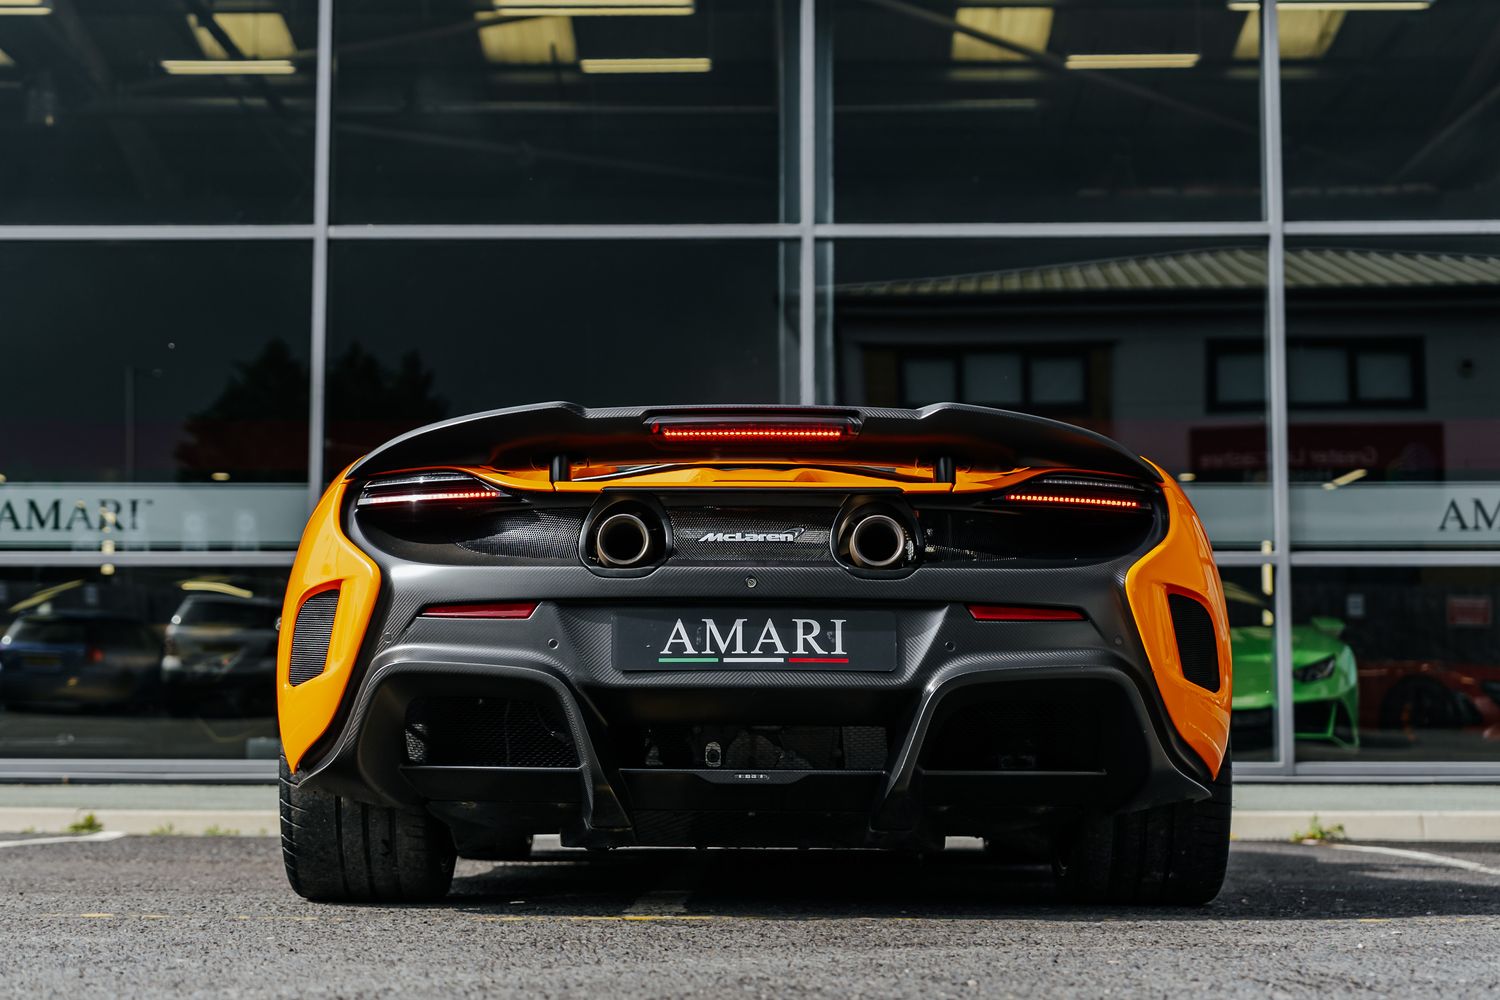 McLaren 675LT Spider